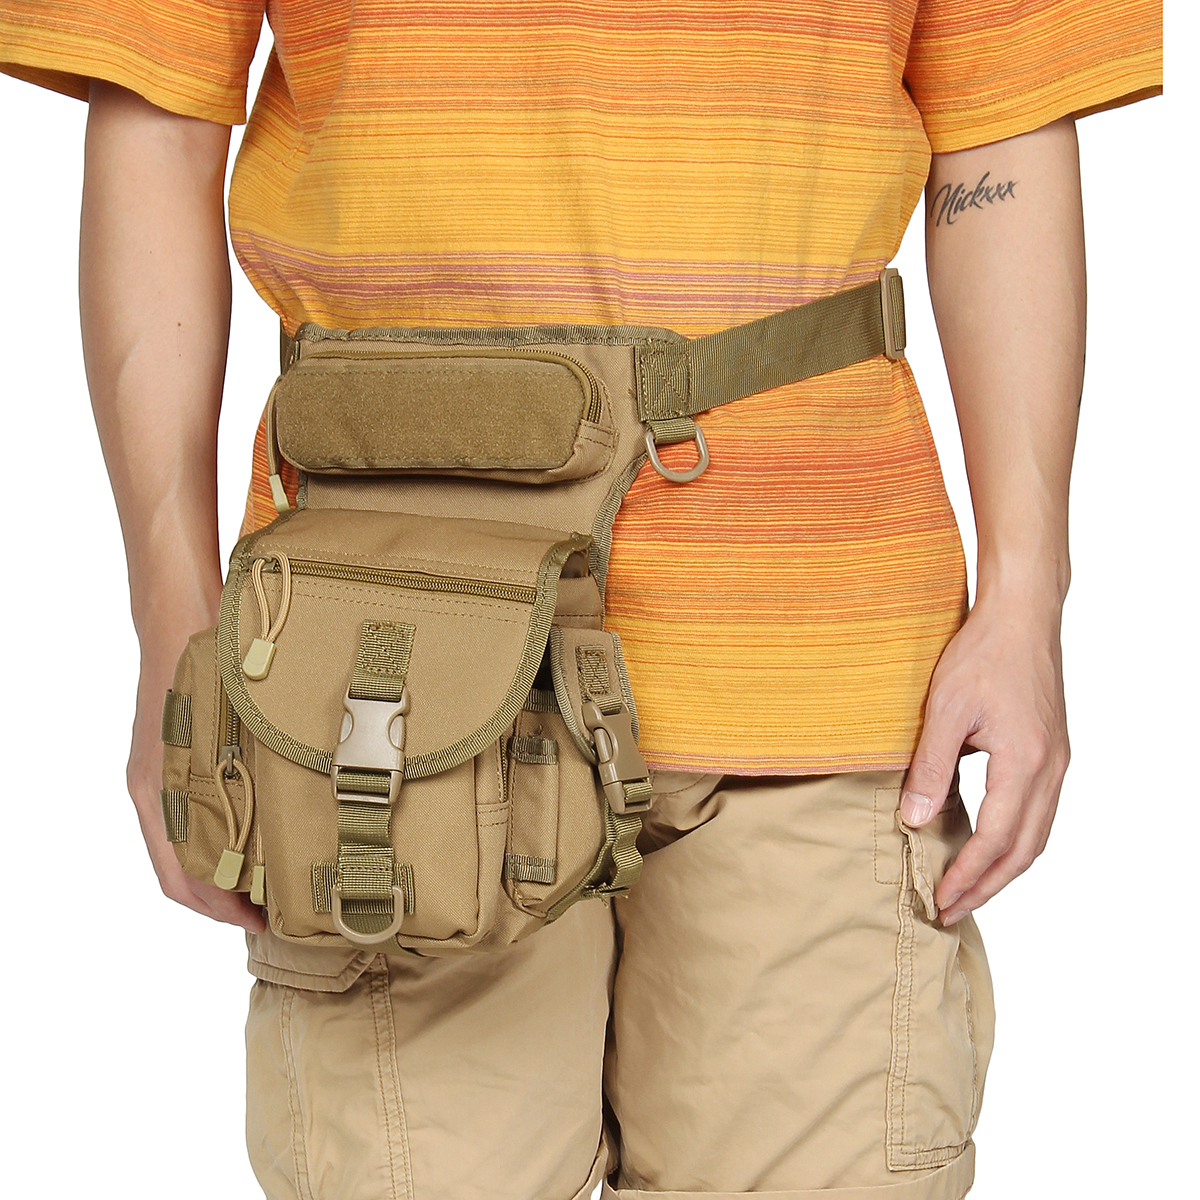 Nylon-Tactical-Waist-Bag-Military-Belt-Buckle-Pouches-Storage-Bag-Leg-Bag-Outdoor-Hunting-Climbing-1763612-7